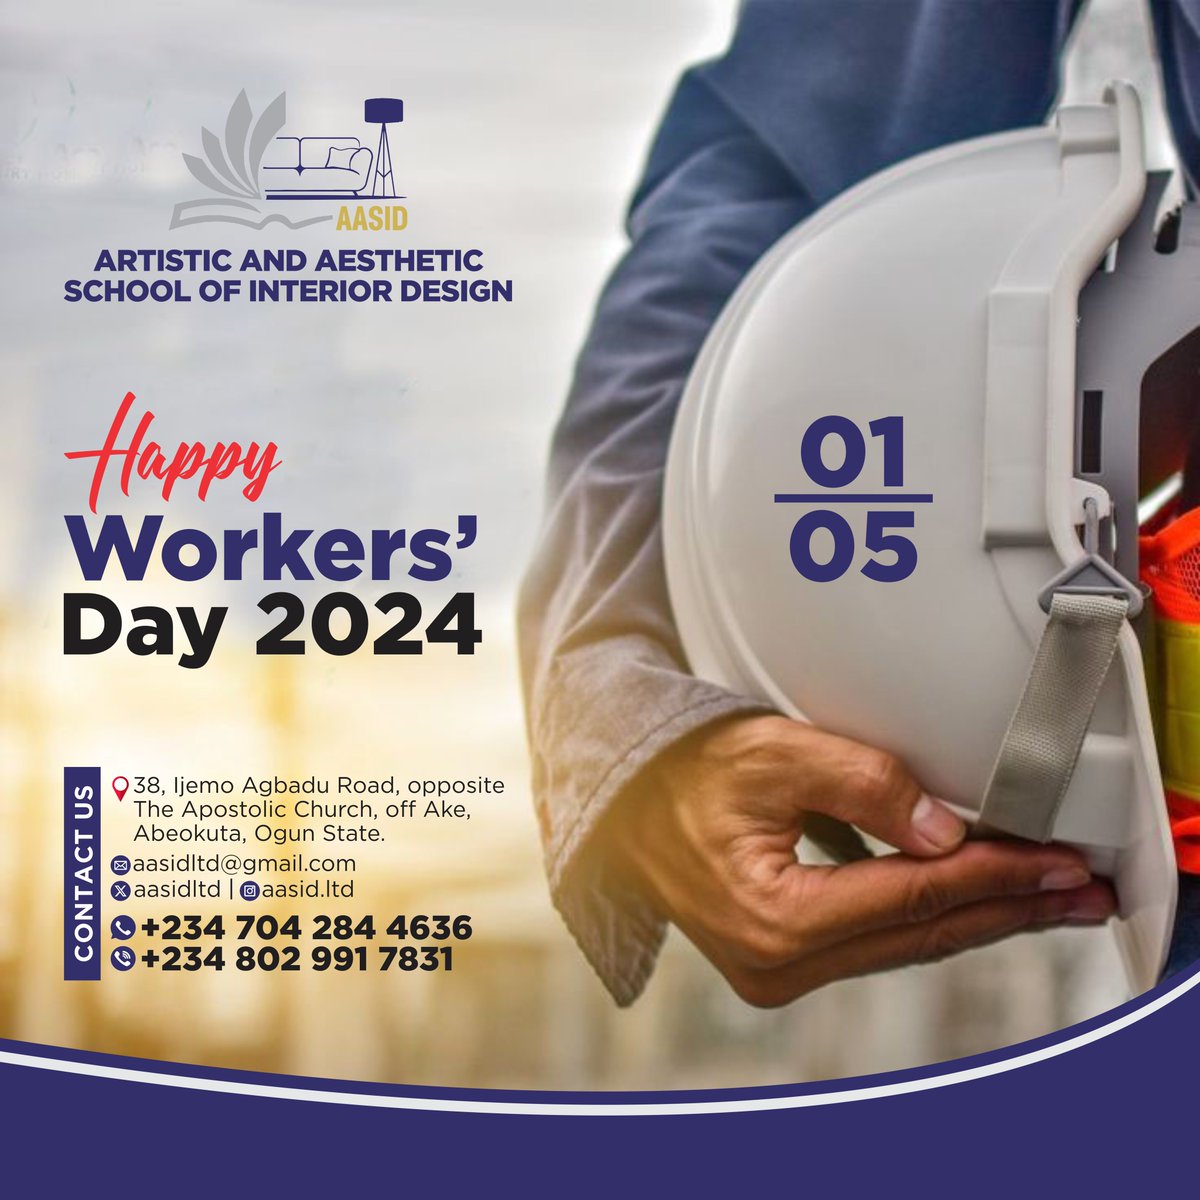 Happy New Month and Happy Workers’ Day! 

#interiordesignschool #interiordesignschoolinabeokuta #AASID #interiordesign